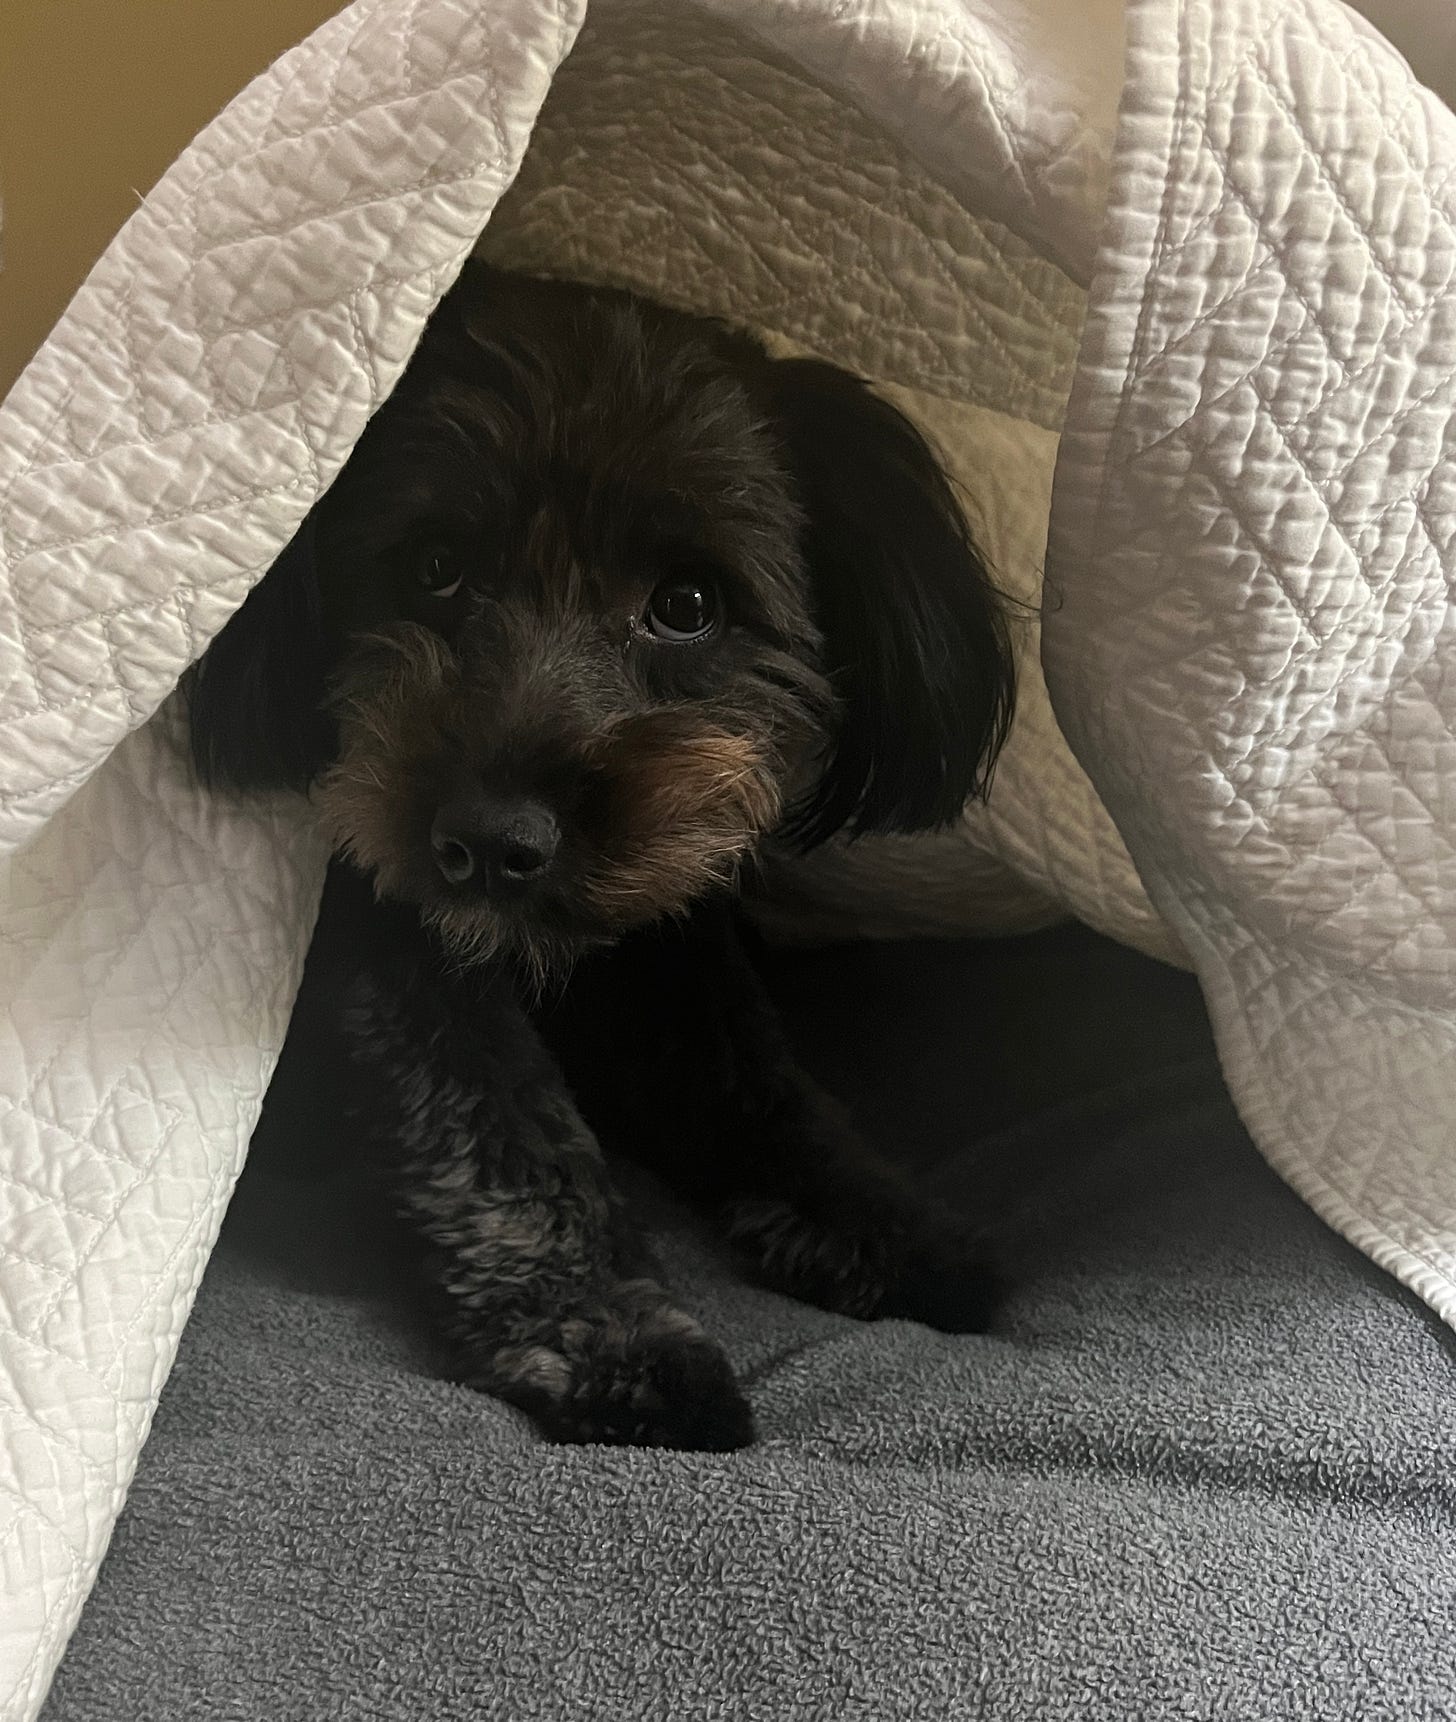 Dog peeking from under a blanket